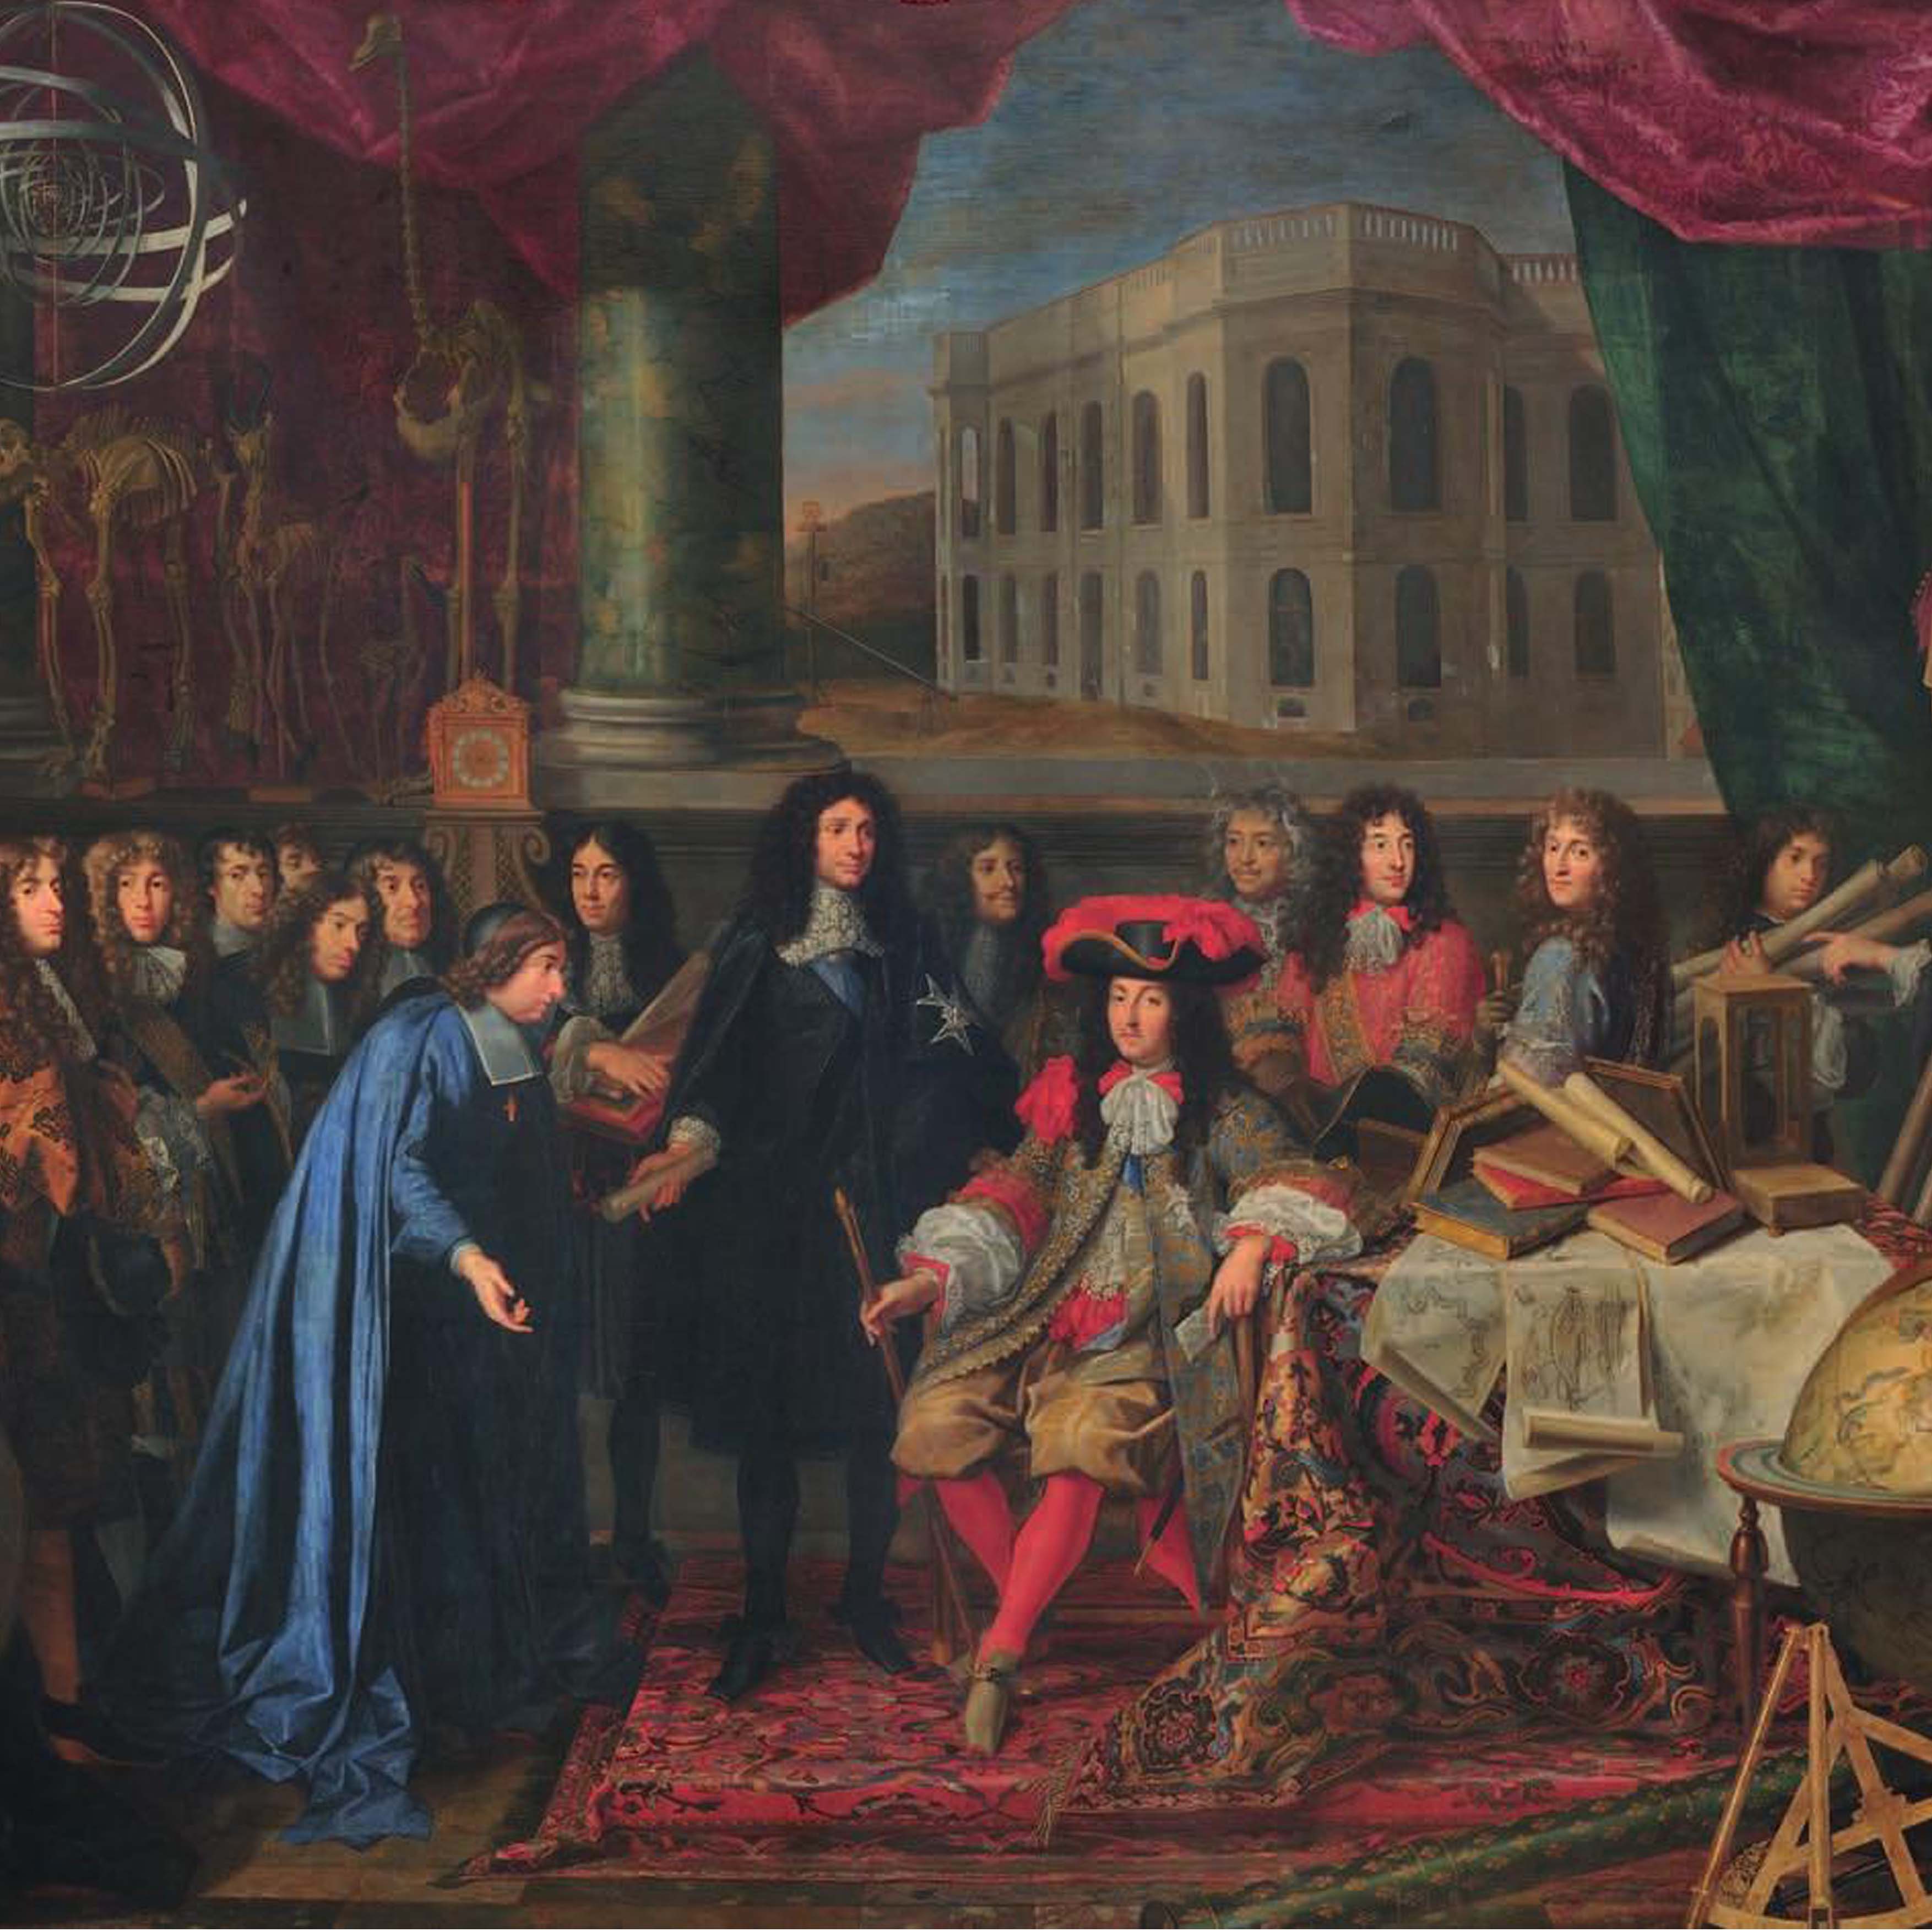 Provosts and Municipal Magistrates of Paris Discussing the Celebration of  Louis XIV 14 dit le Roi Soleil (1638-1715) at the Hotel de Ville after his  re-establishment in 1687